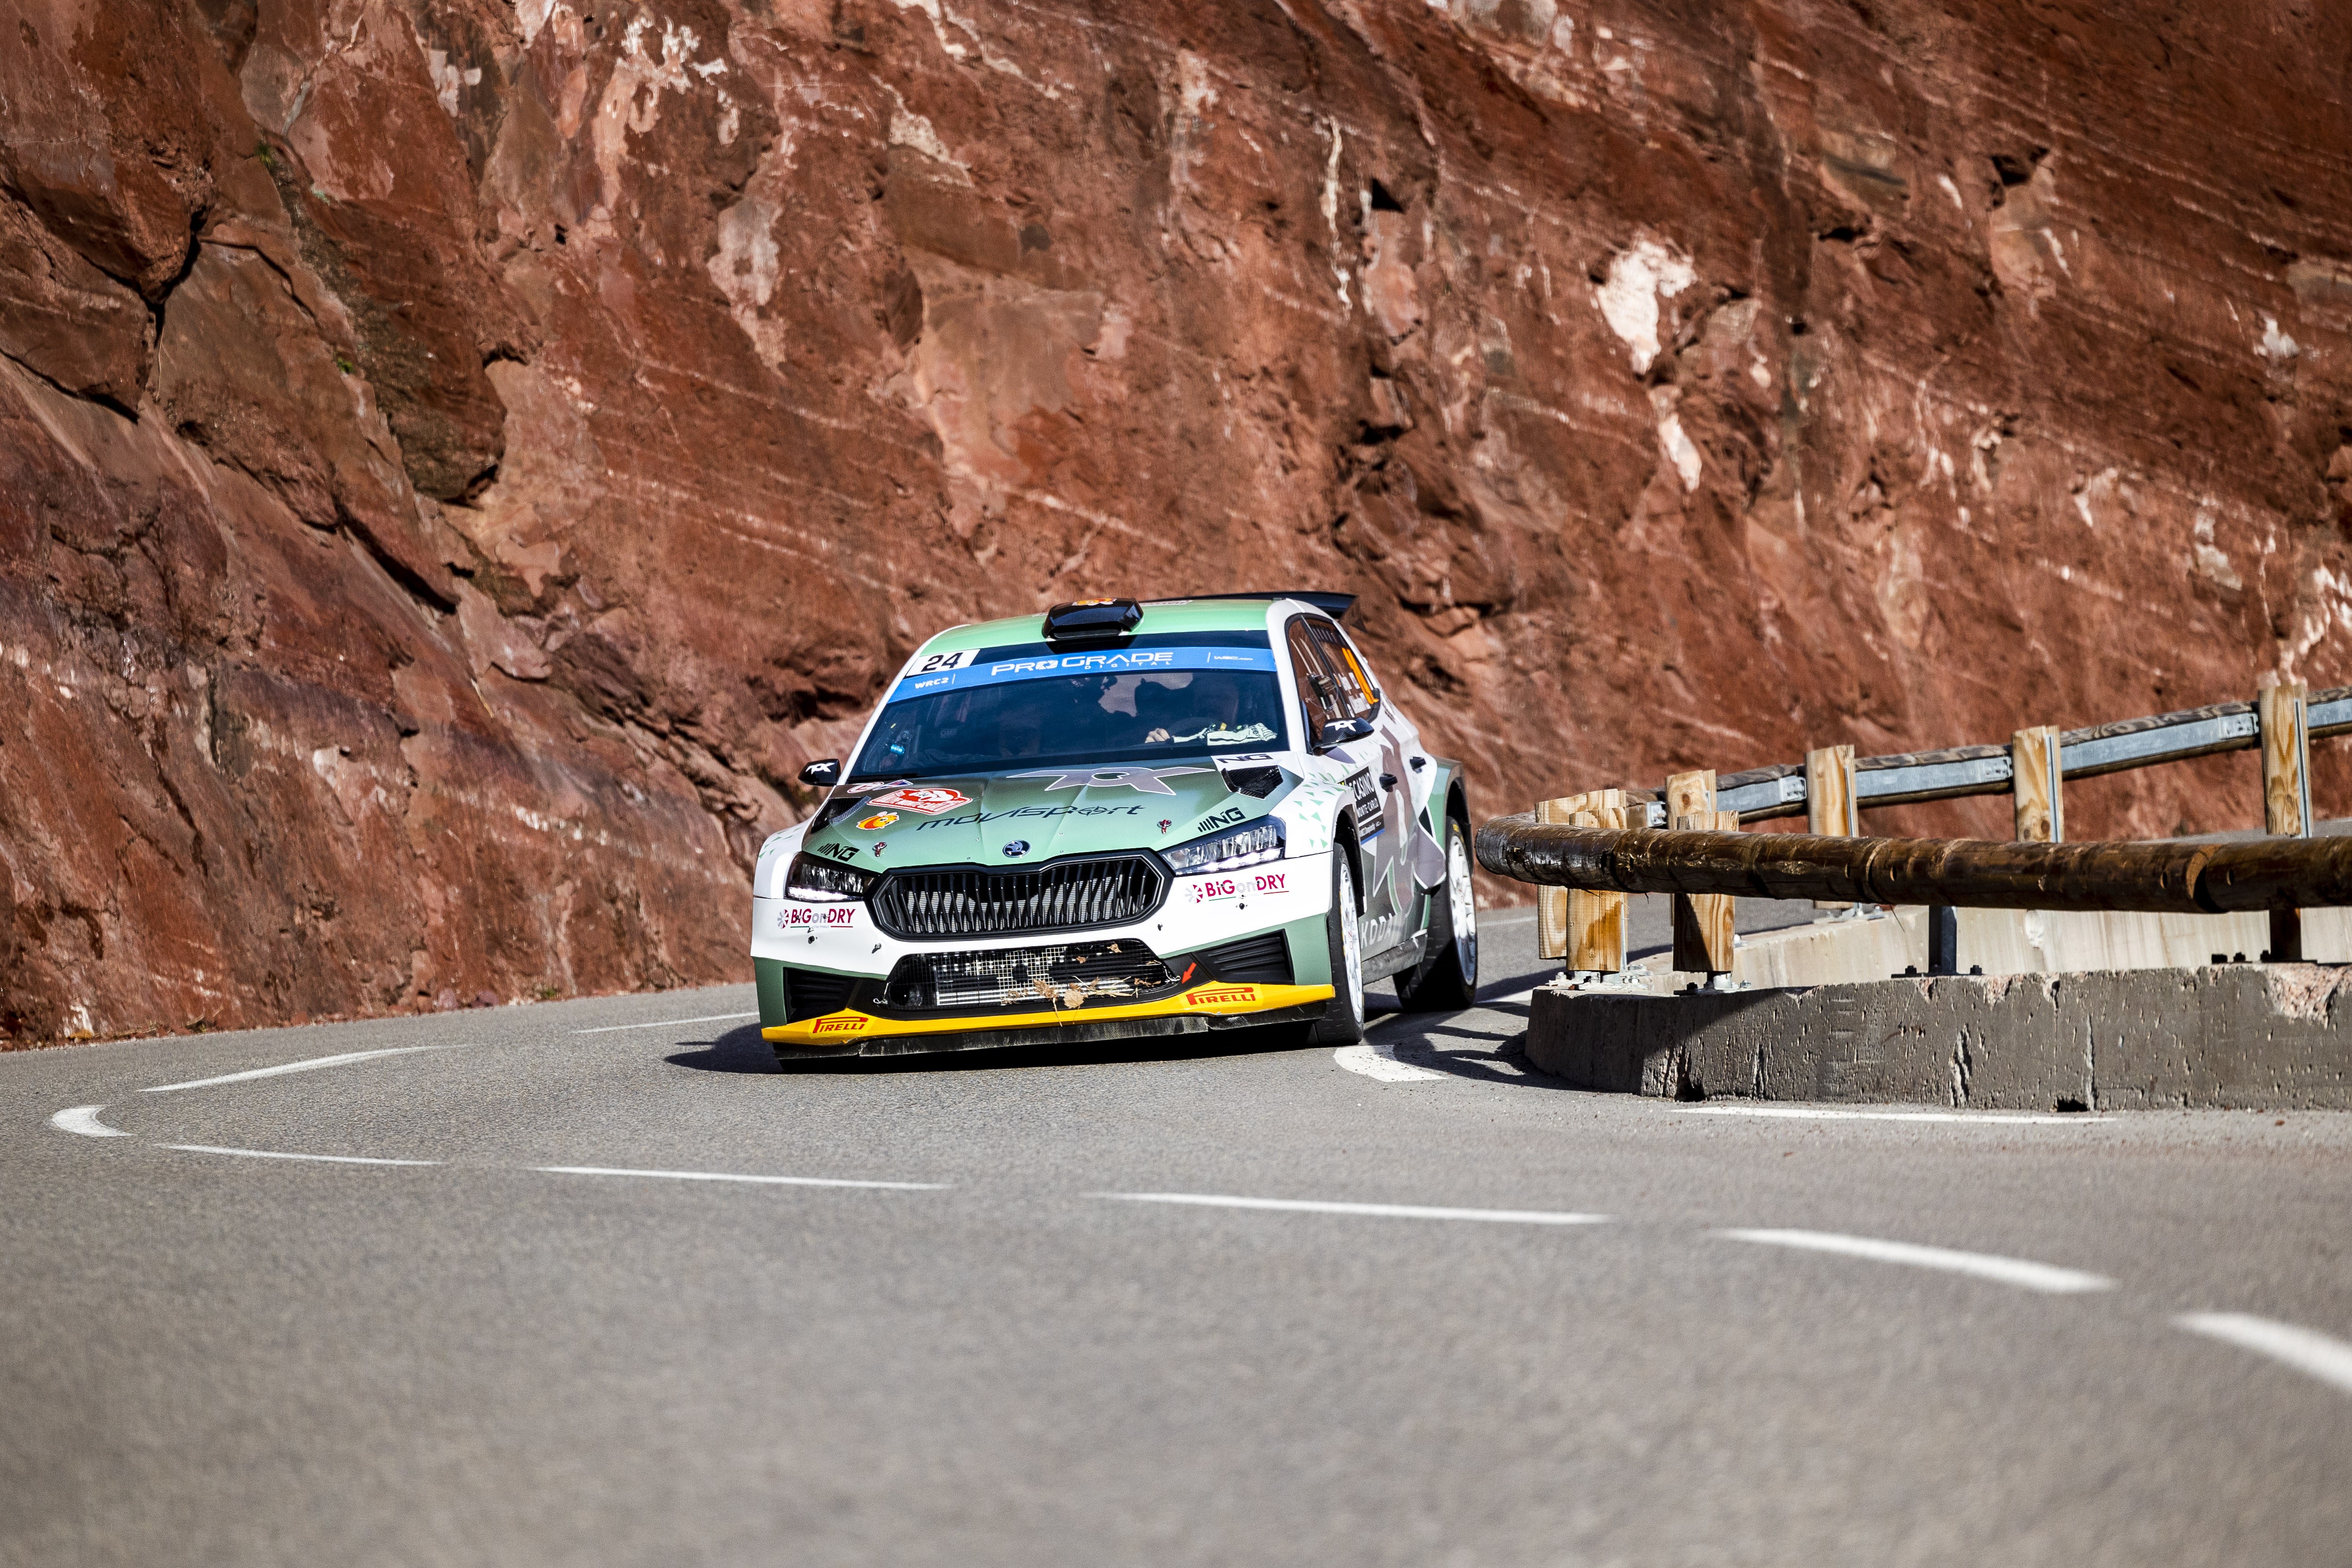 2023 WRC - Rallye Monte-Carlo - N. Gryazin/K. Aleksandrov, Toksport WRT2 (photo: DPPI)